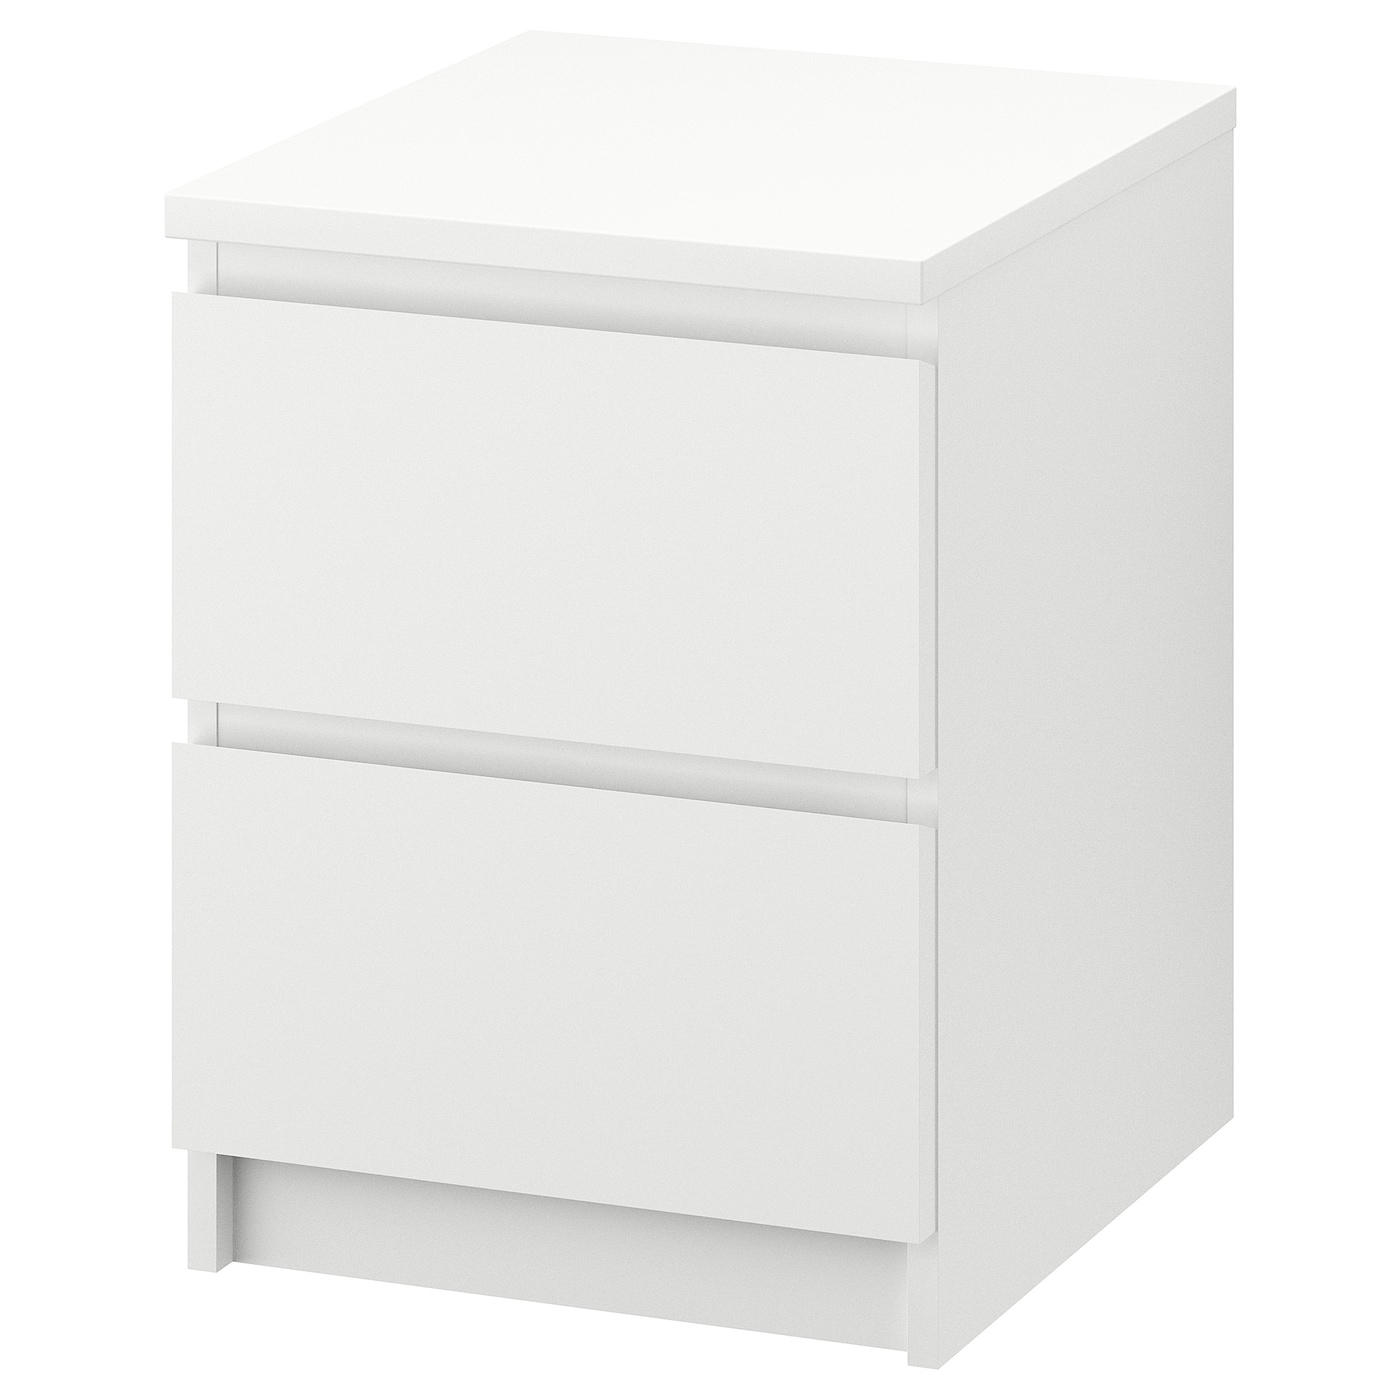 Комод с 2 ящиками - IKEA MALM, 40х55х48 см, белый МАЛЬМ ИКЕА